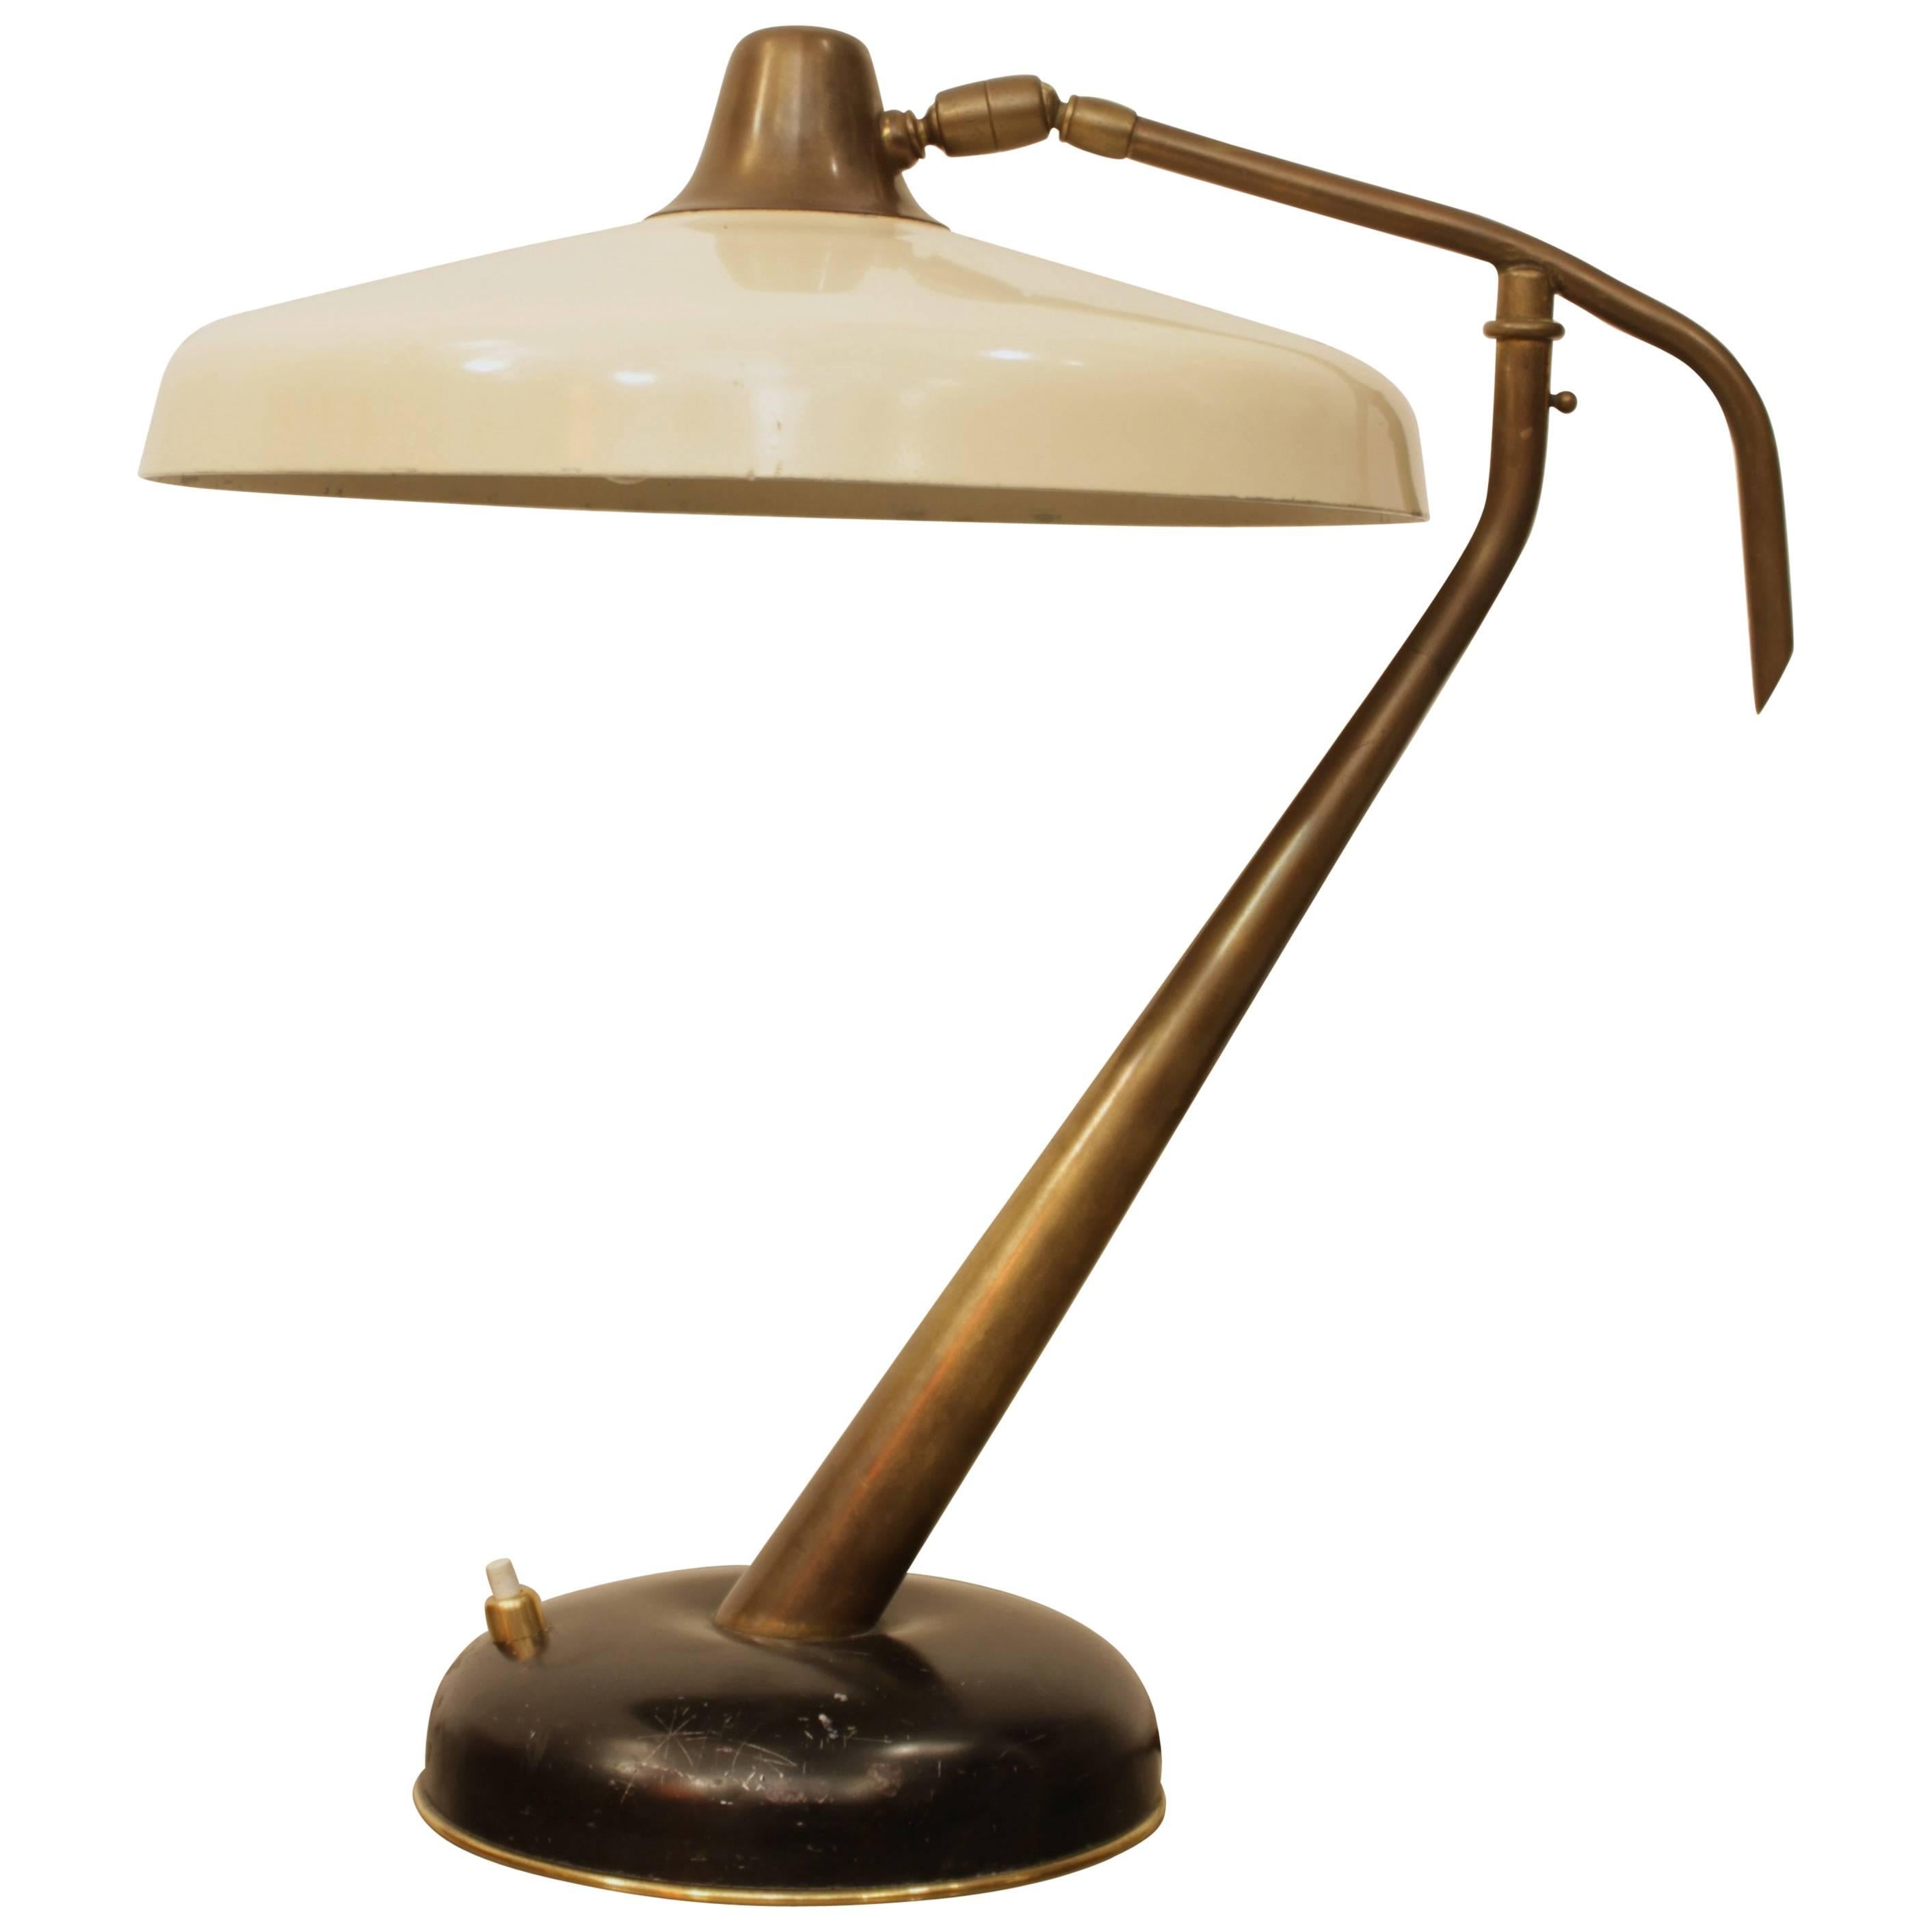 Oscar Torlasco Table or Desk Lamp by Lumi